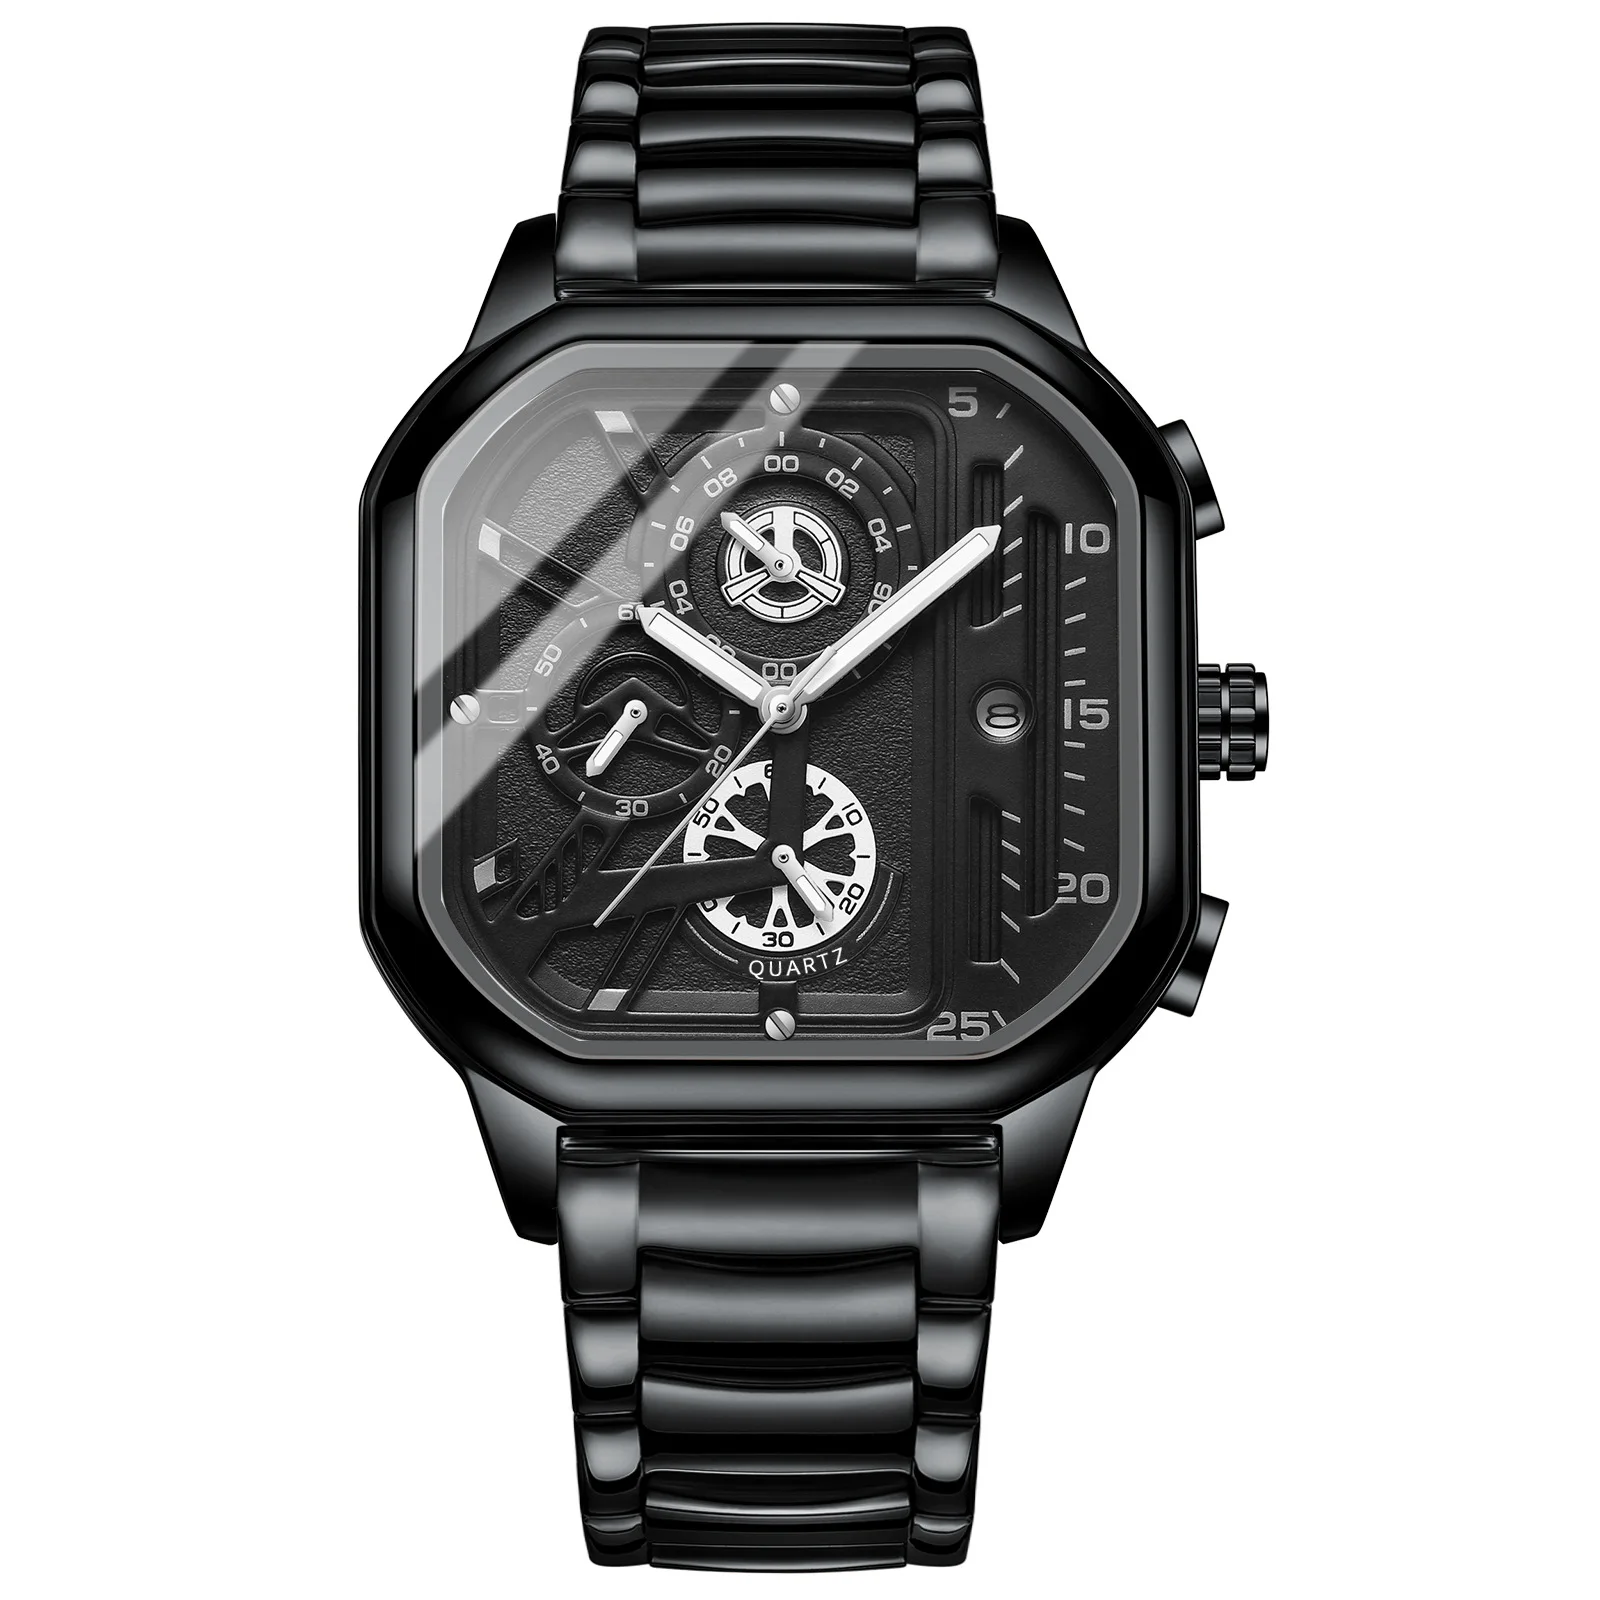 

Original Chronograph Date Business Top Luxury Brand Quartz Watch Men Stainless Steel Waterproof Wristwatch Relogio Masculino